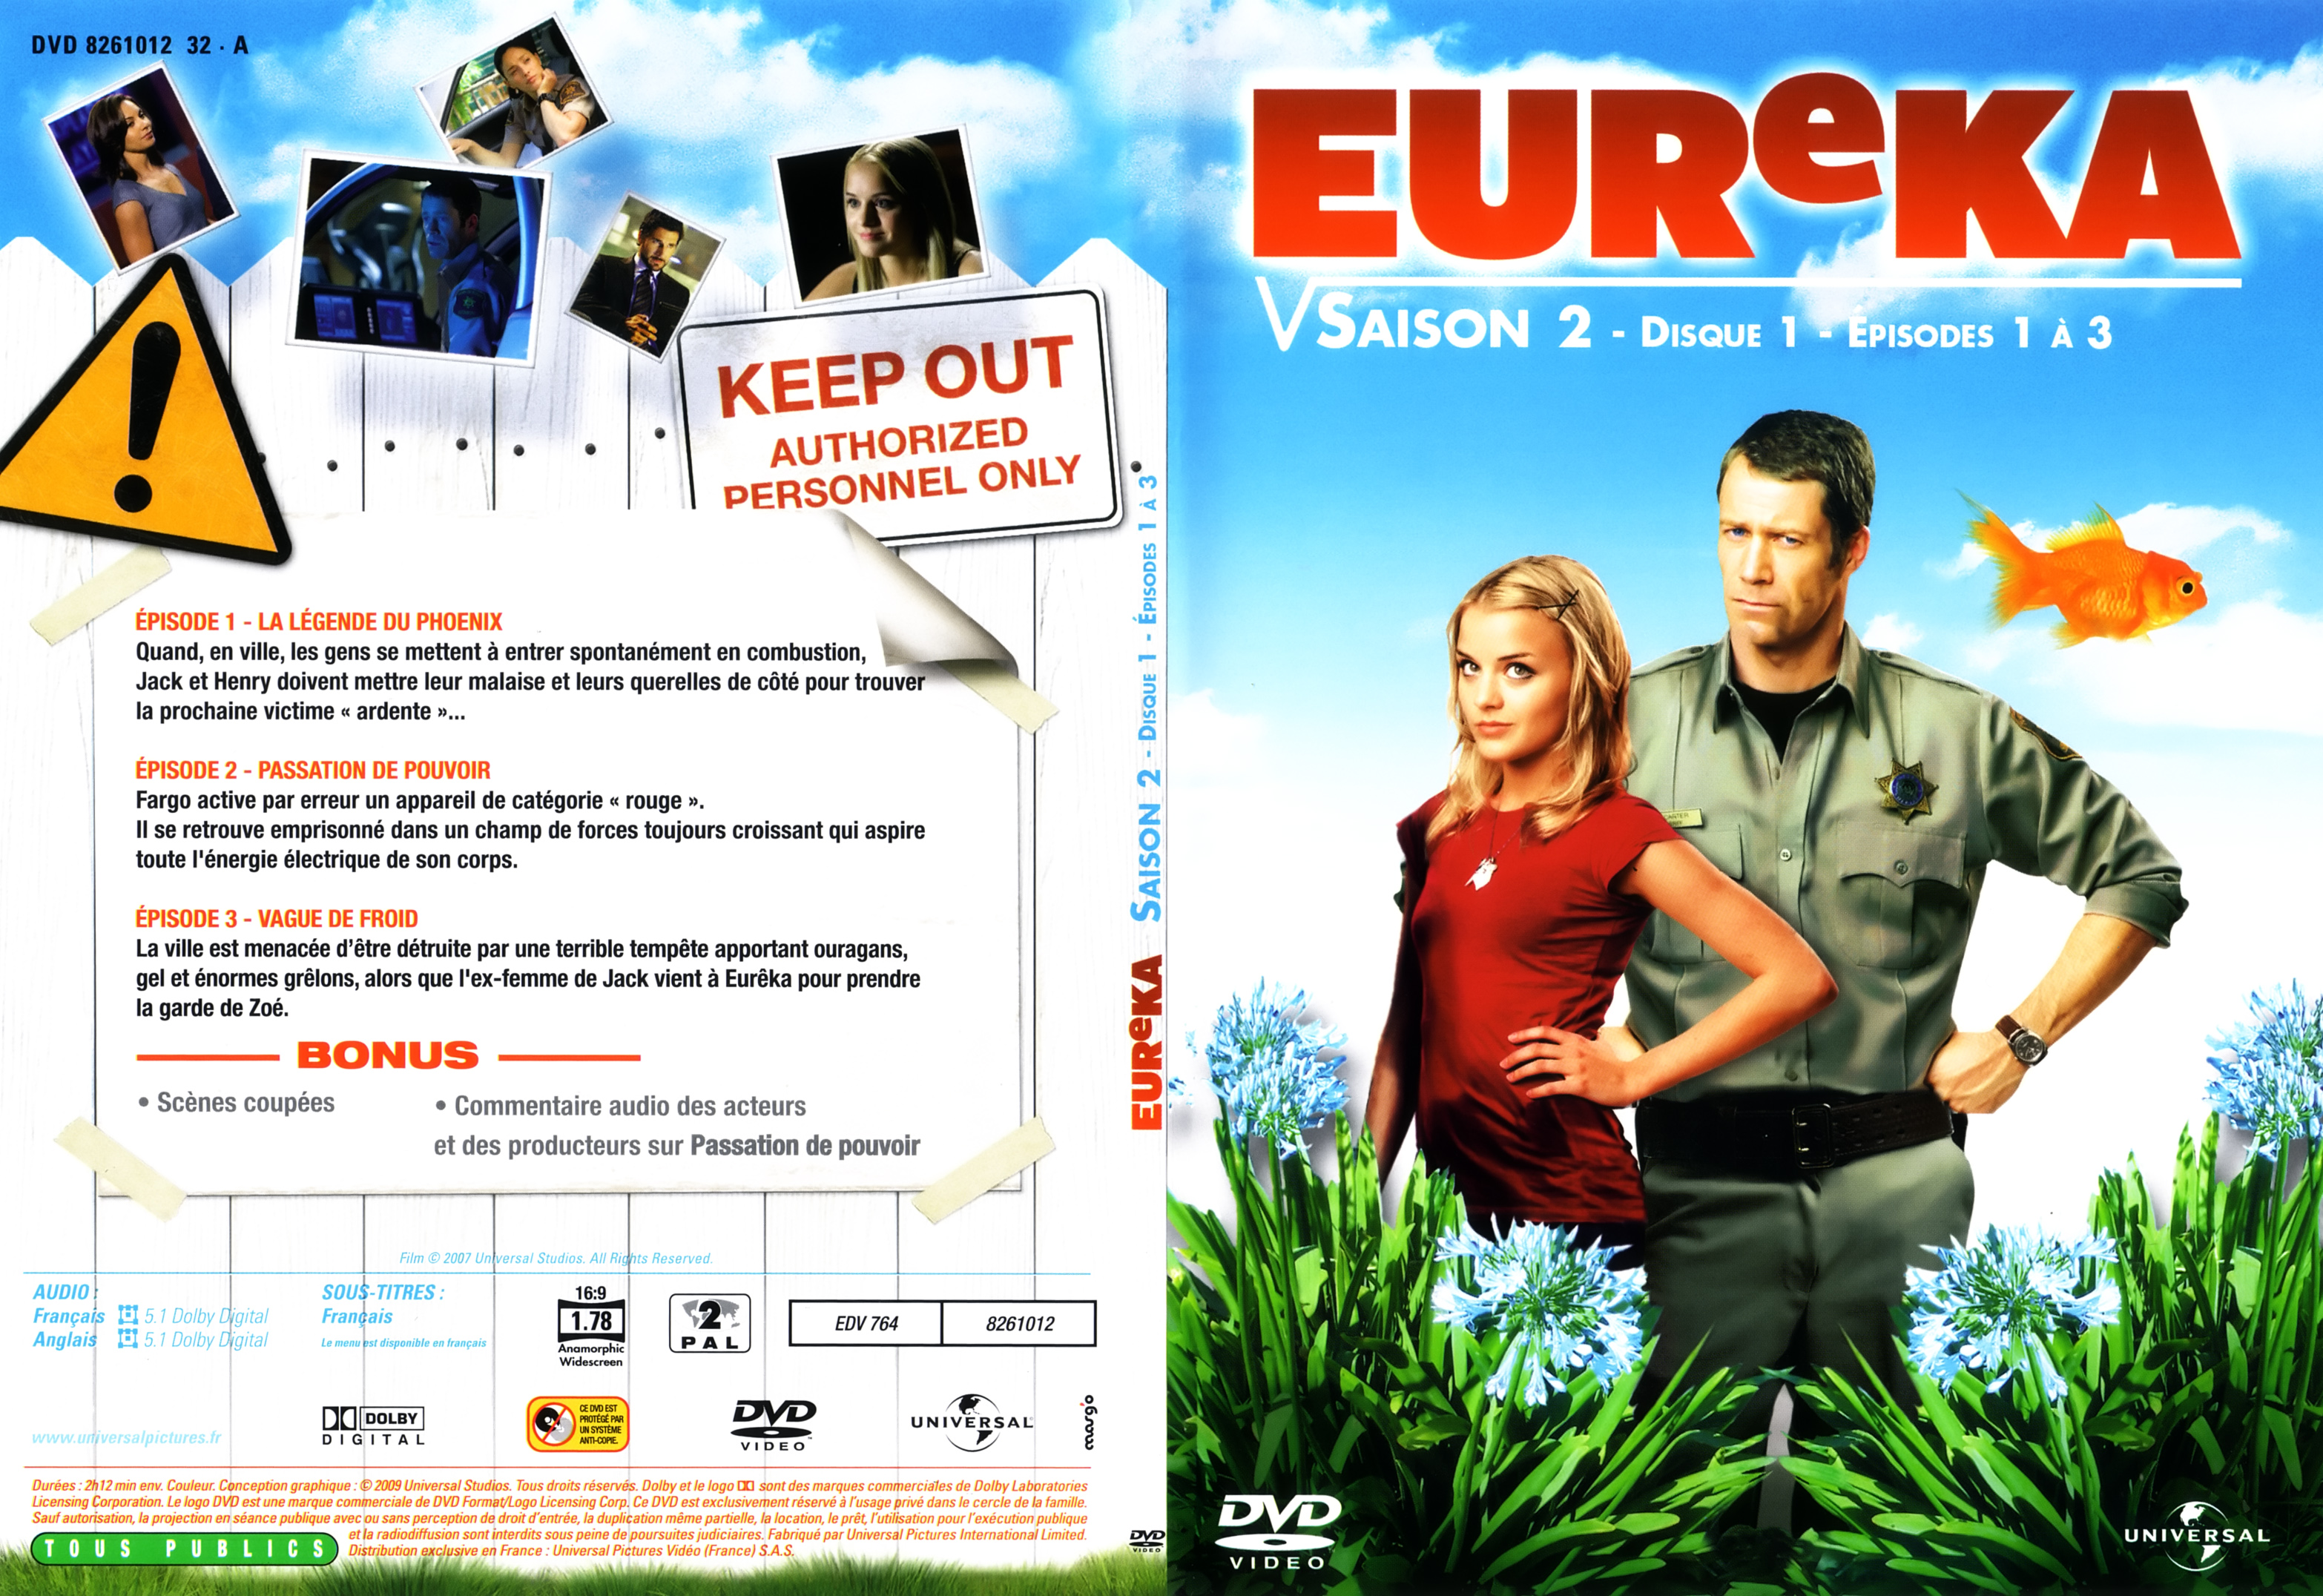 Jaquette DVD Eureka saison 2 DVD 1